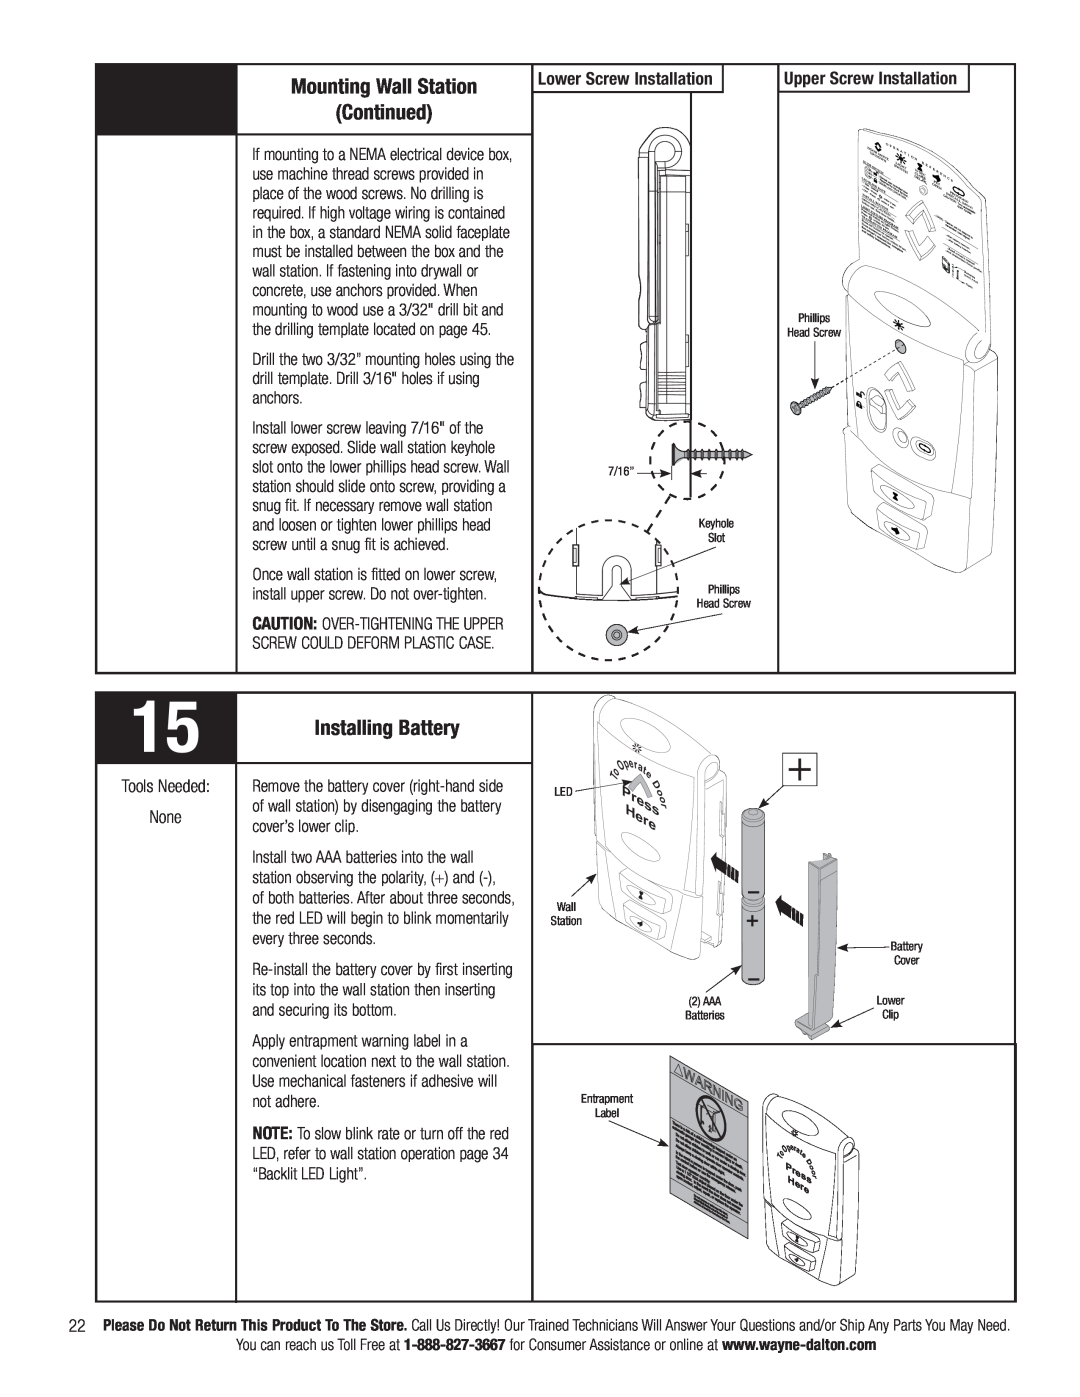 Wayne-Dalton 3790-Z installation instructions Mounting Wall Station, Installing Battery 